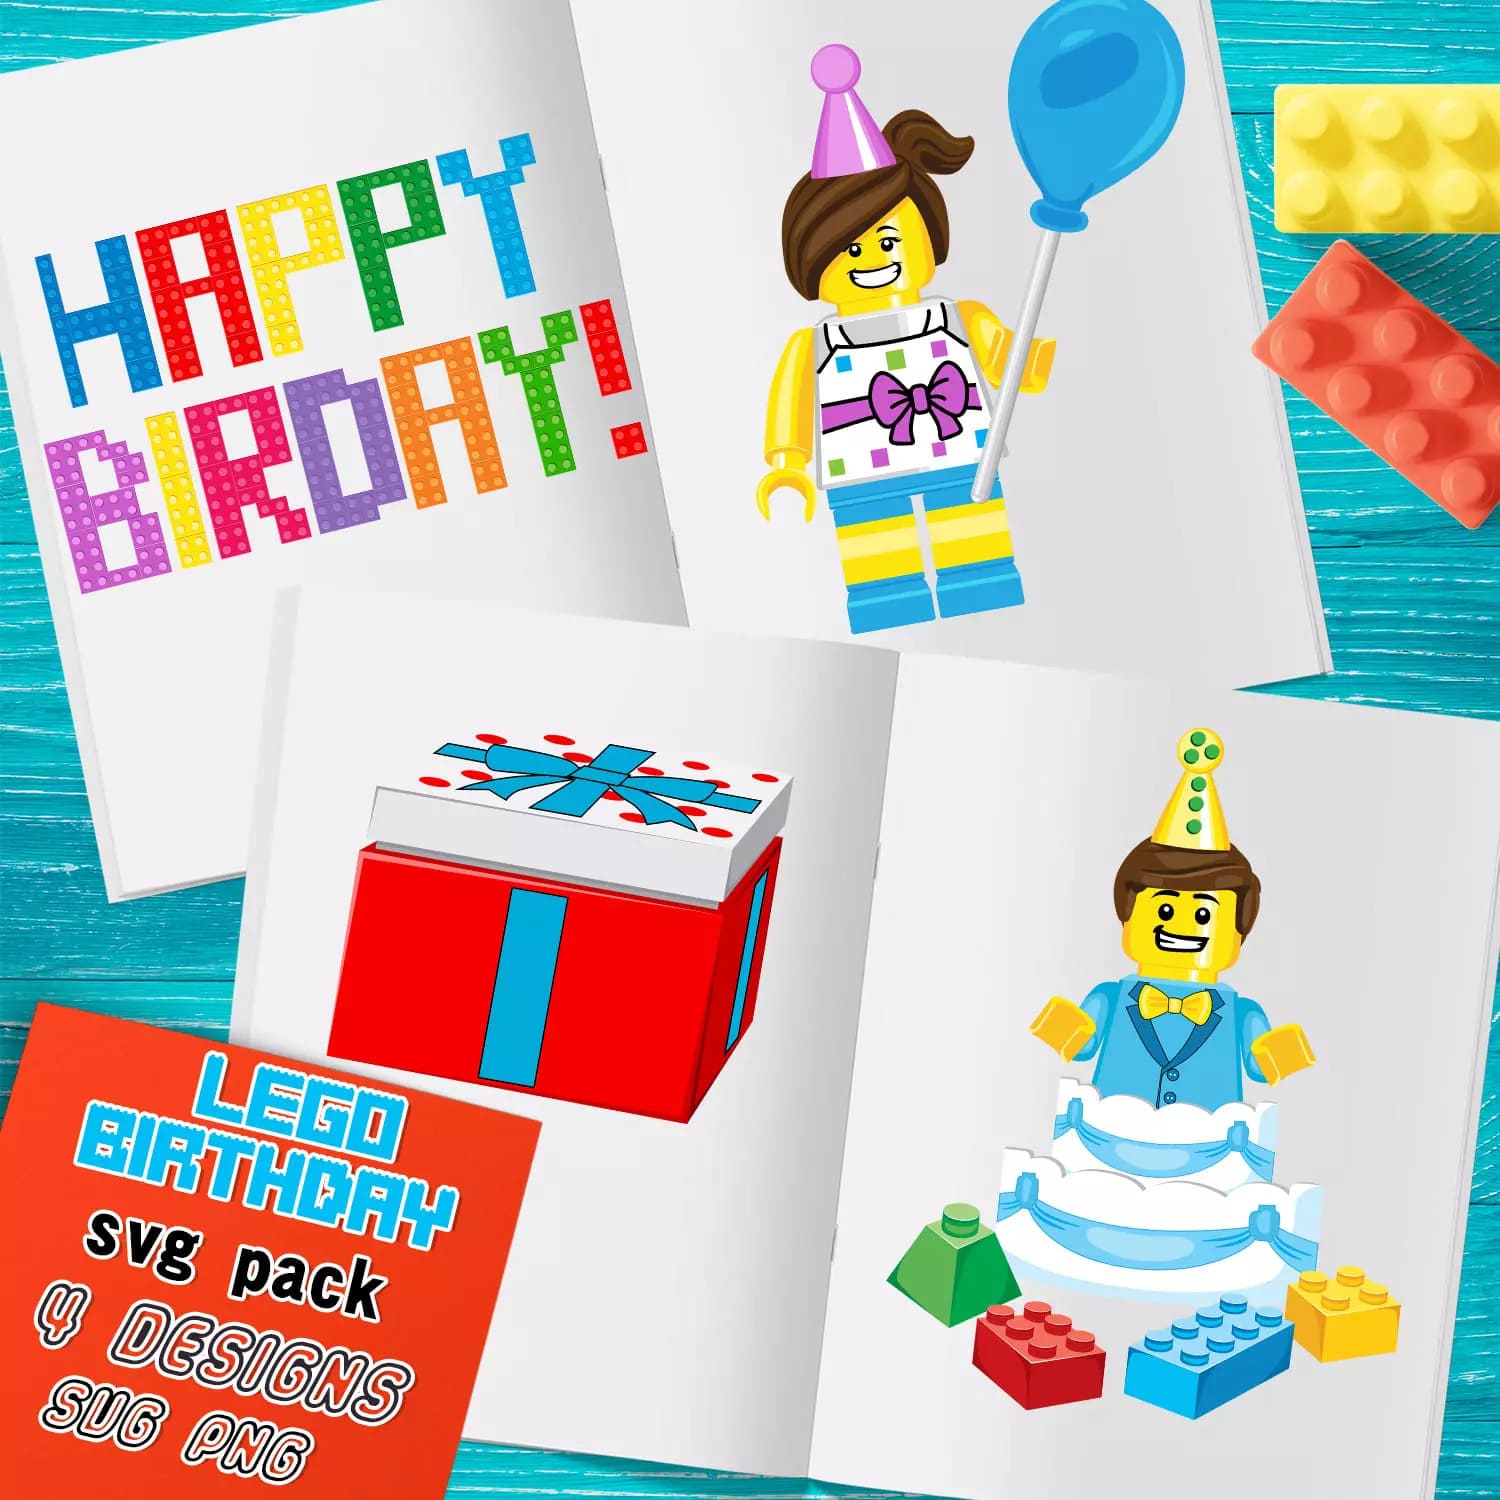 Lego Birthday SVG Preview.